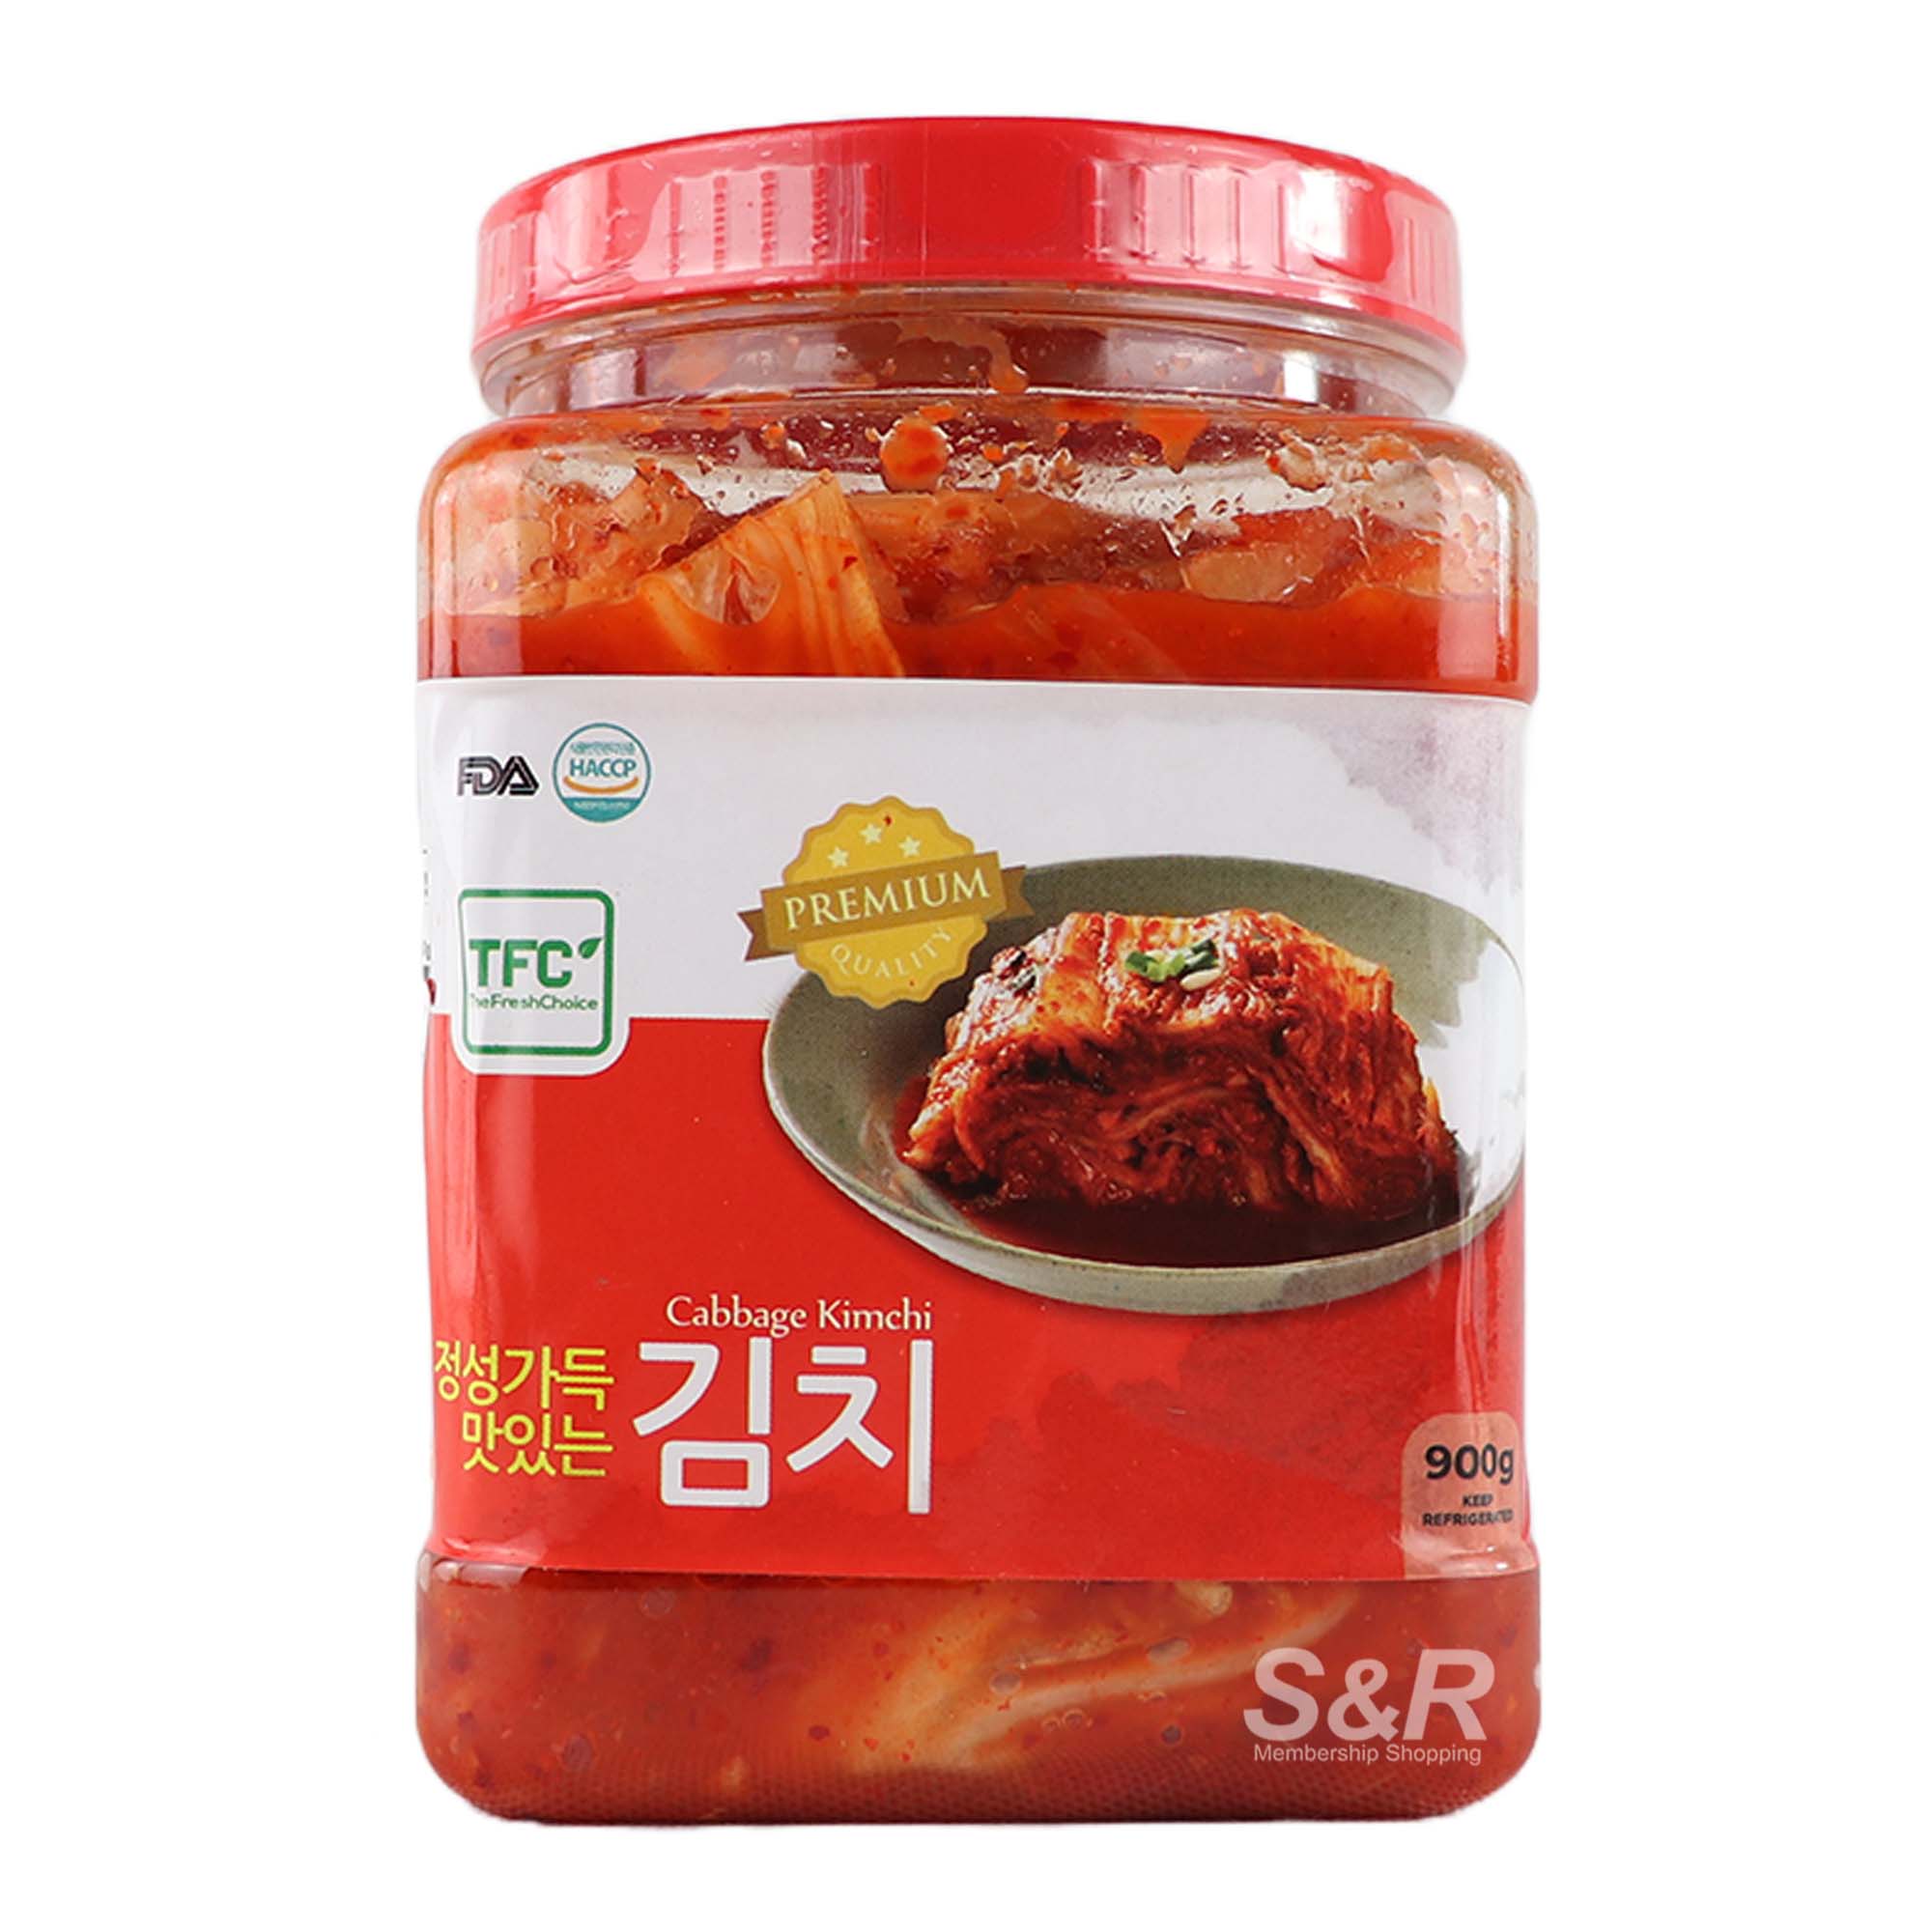 TFC Cabbage Kimchi 900g